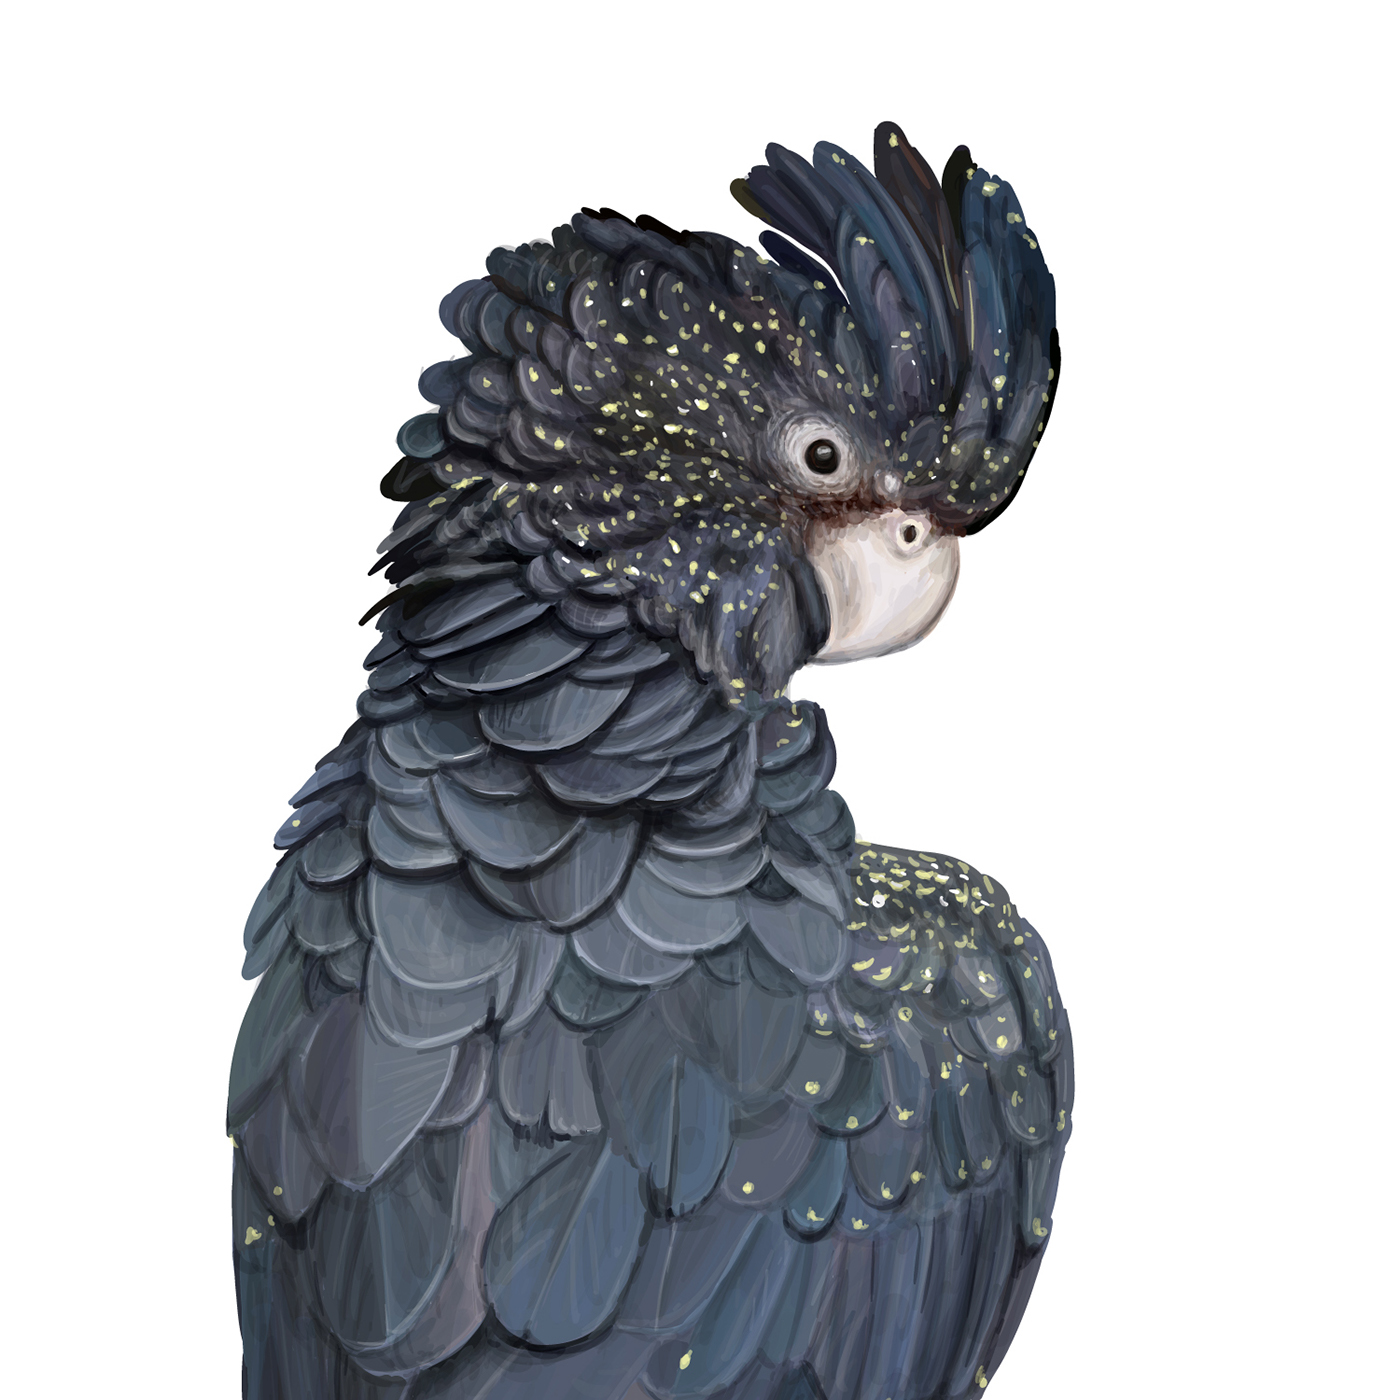 ornithology Bird Illustration parrot illustration botanical illustration surface design bird watercolor exotic bird illustration vector bird zoological illustration book illustration